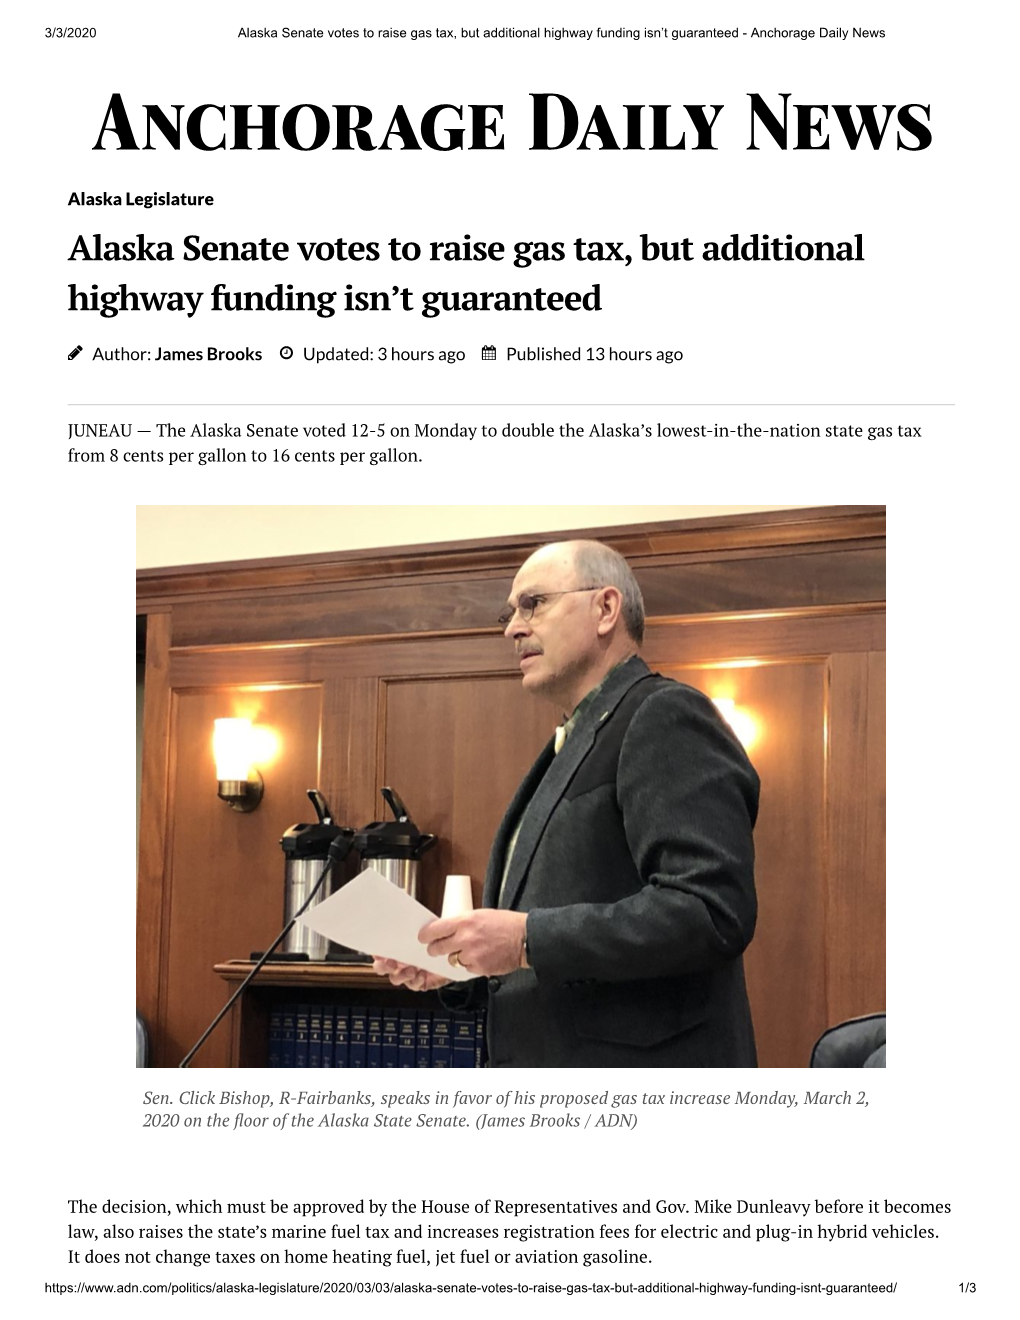 Alaska Senate Votes to Raise Gas Tax, but Additional Highway Funding Isn't